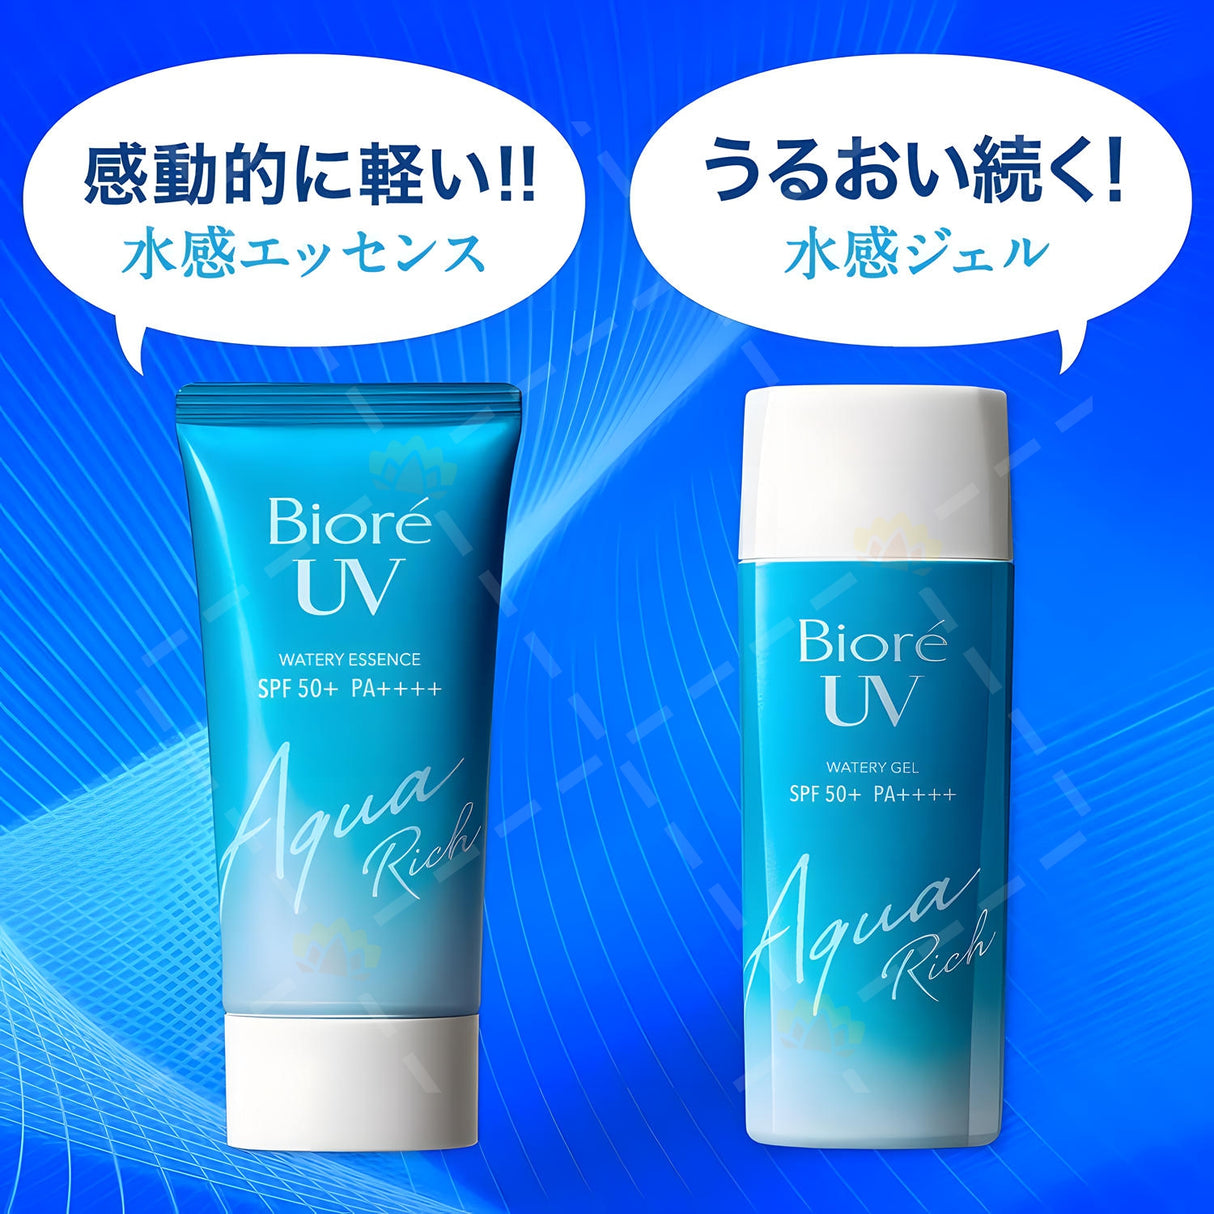 Japan Biore Watery Refreshing Sunscreen Lotion SPF 50+ PA ++++ - 1.7x Increment 155ml 